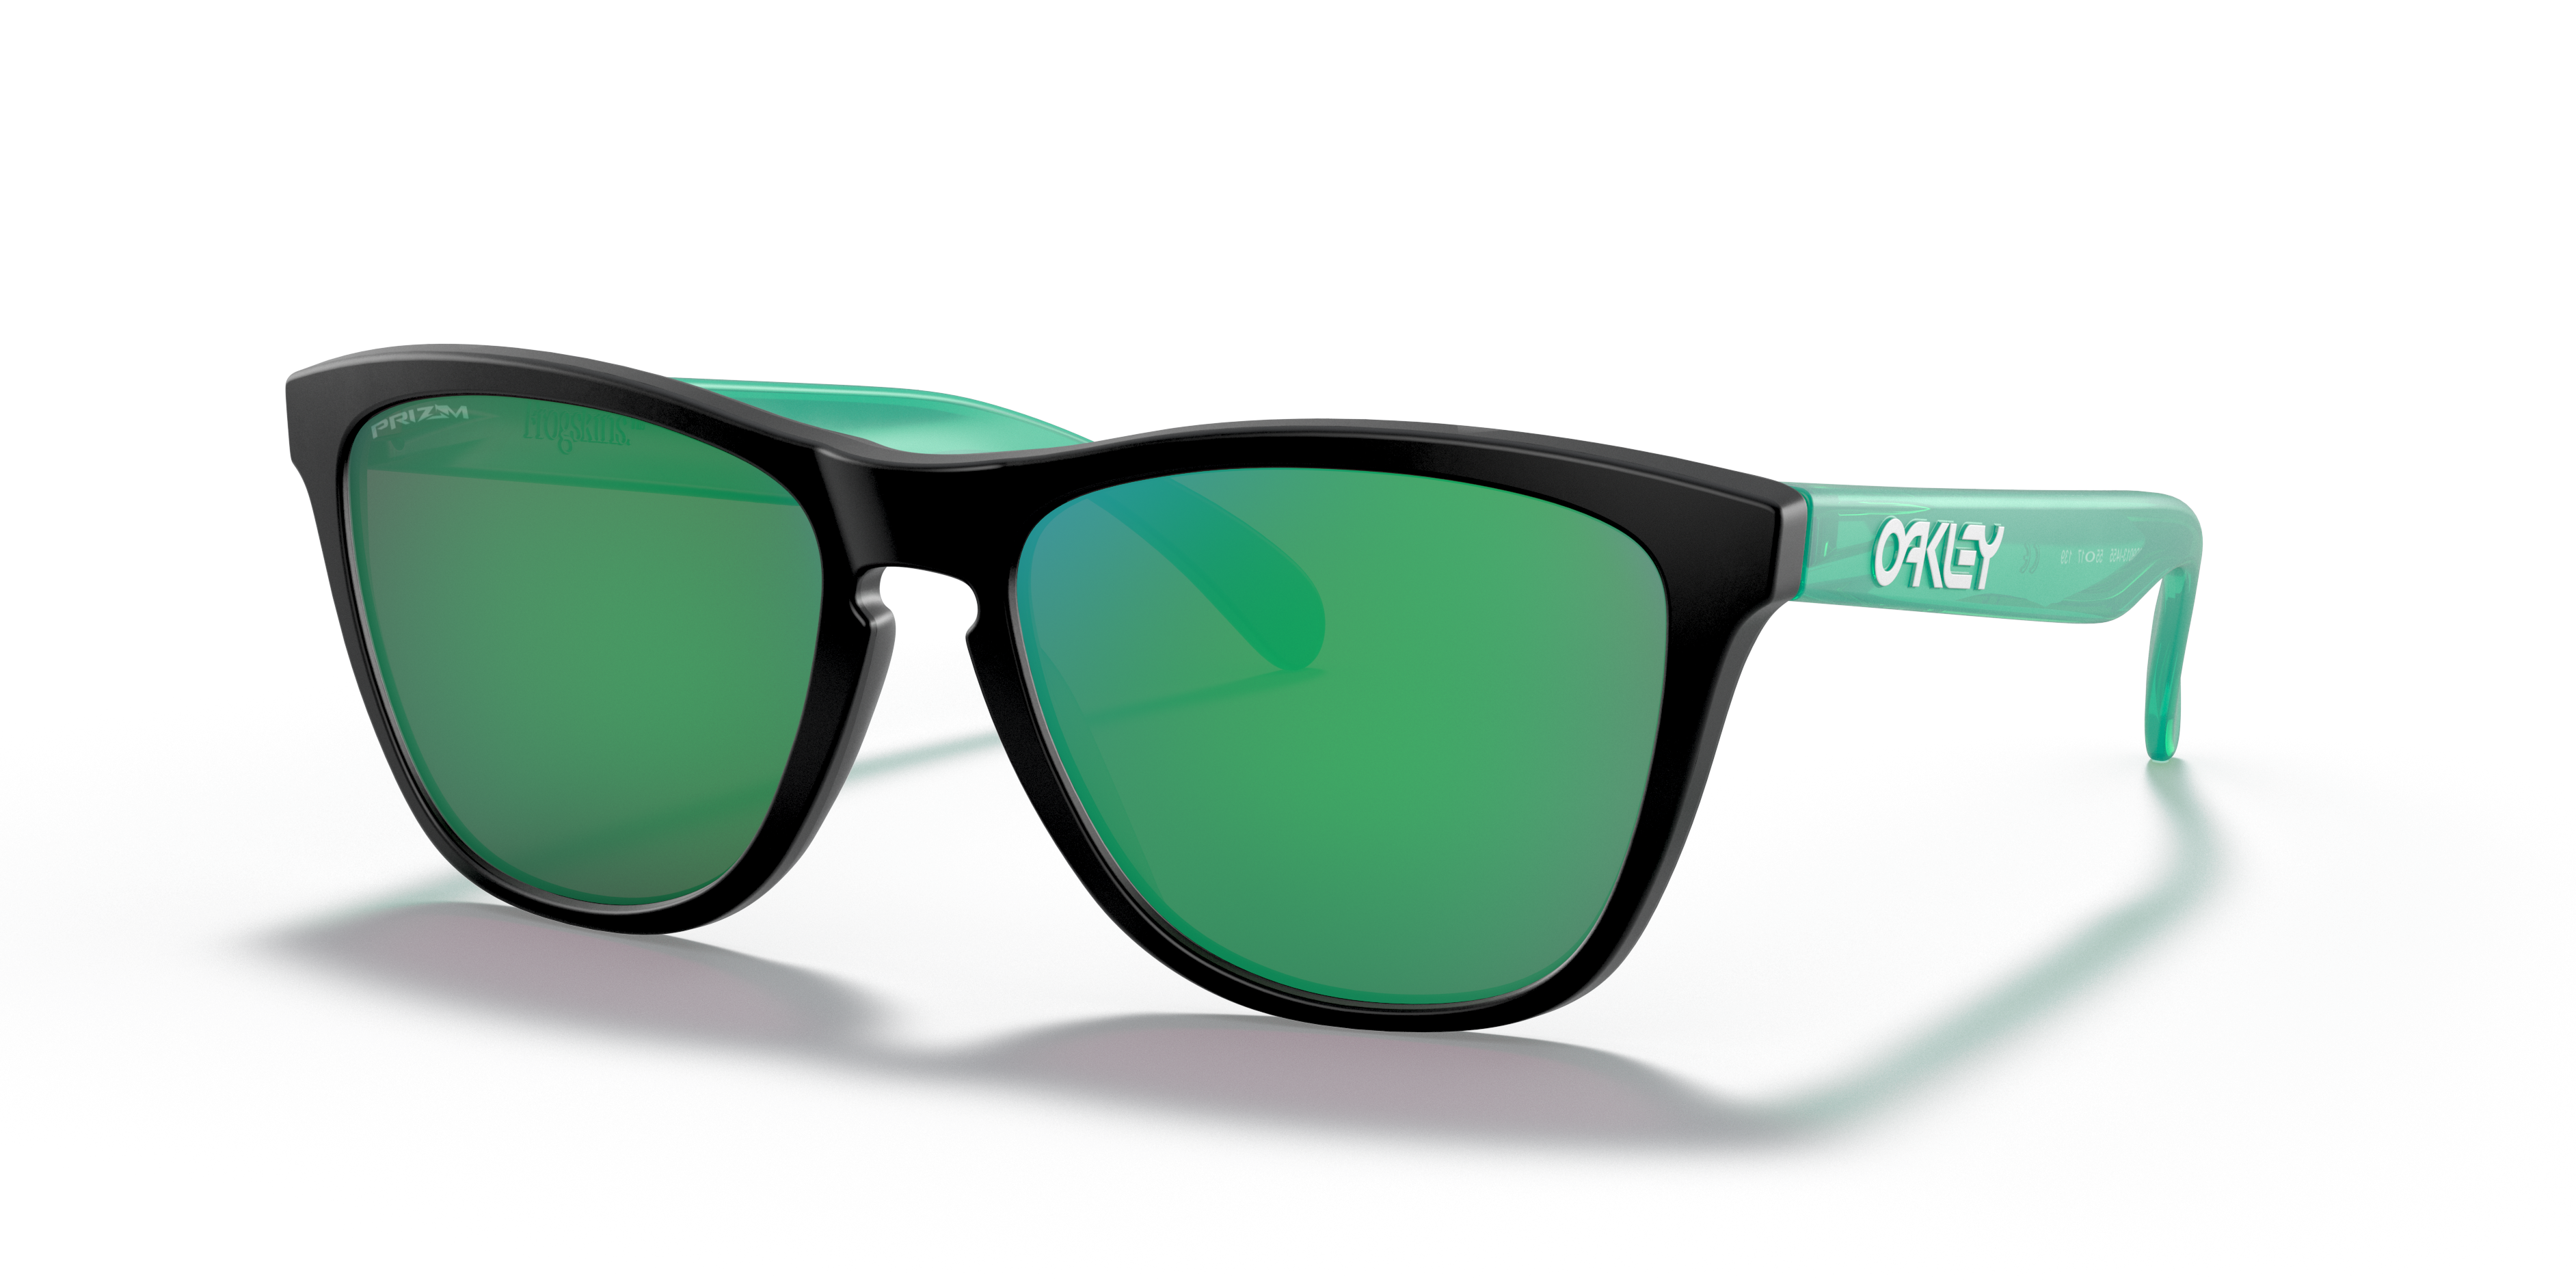 oakley green sunglasses